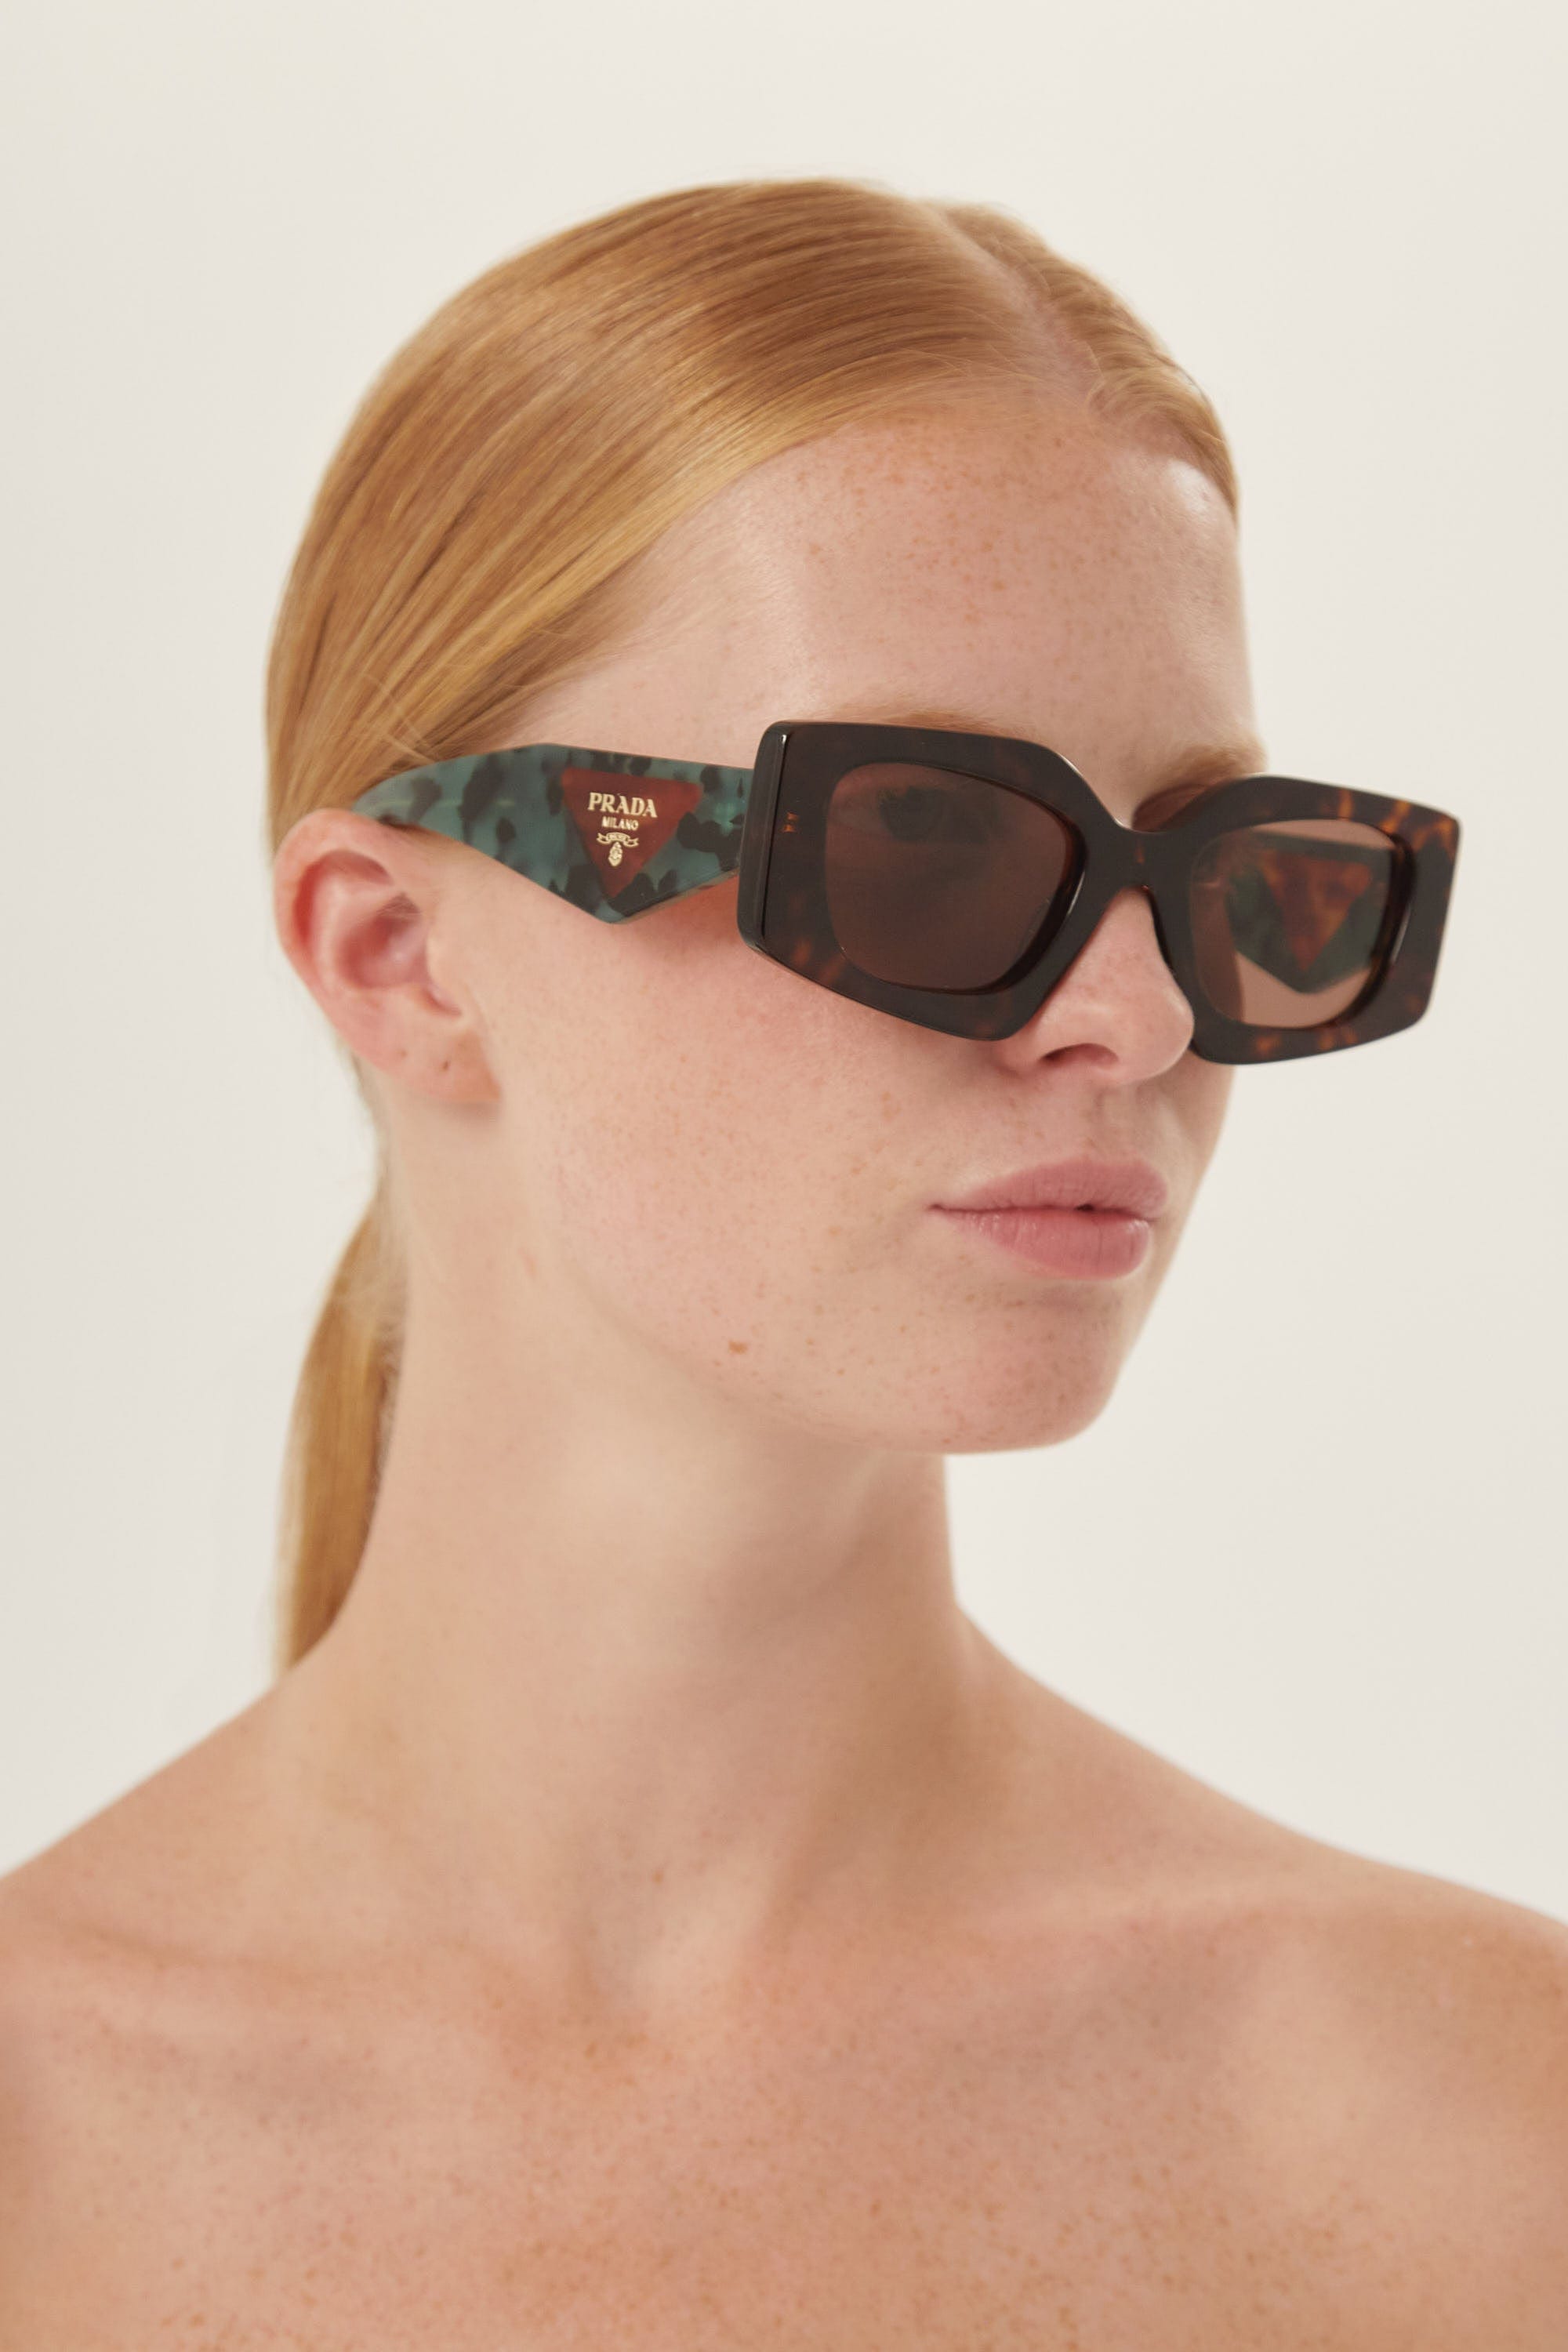 Prada havana sunglasses - Eyewear Club